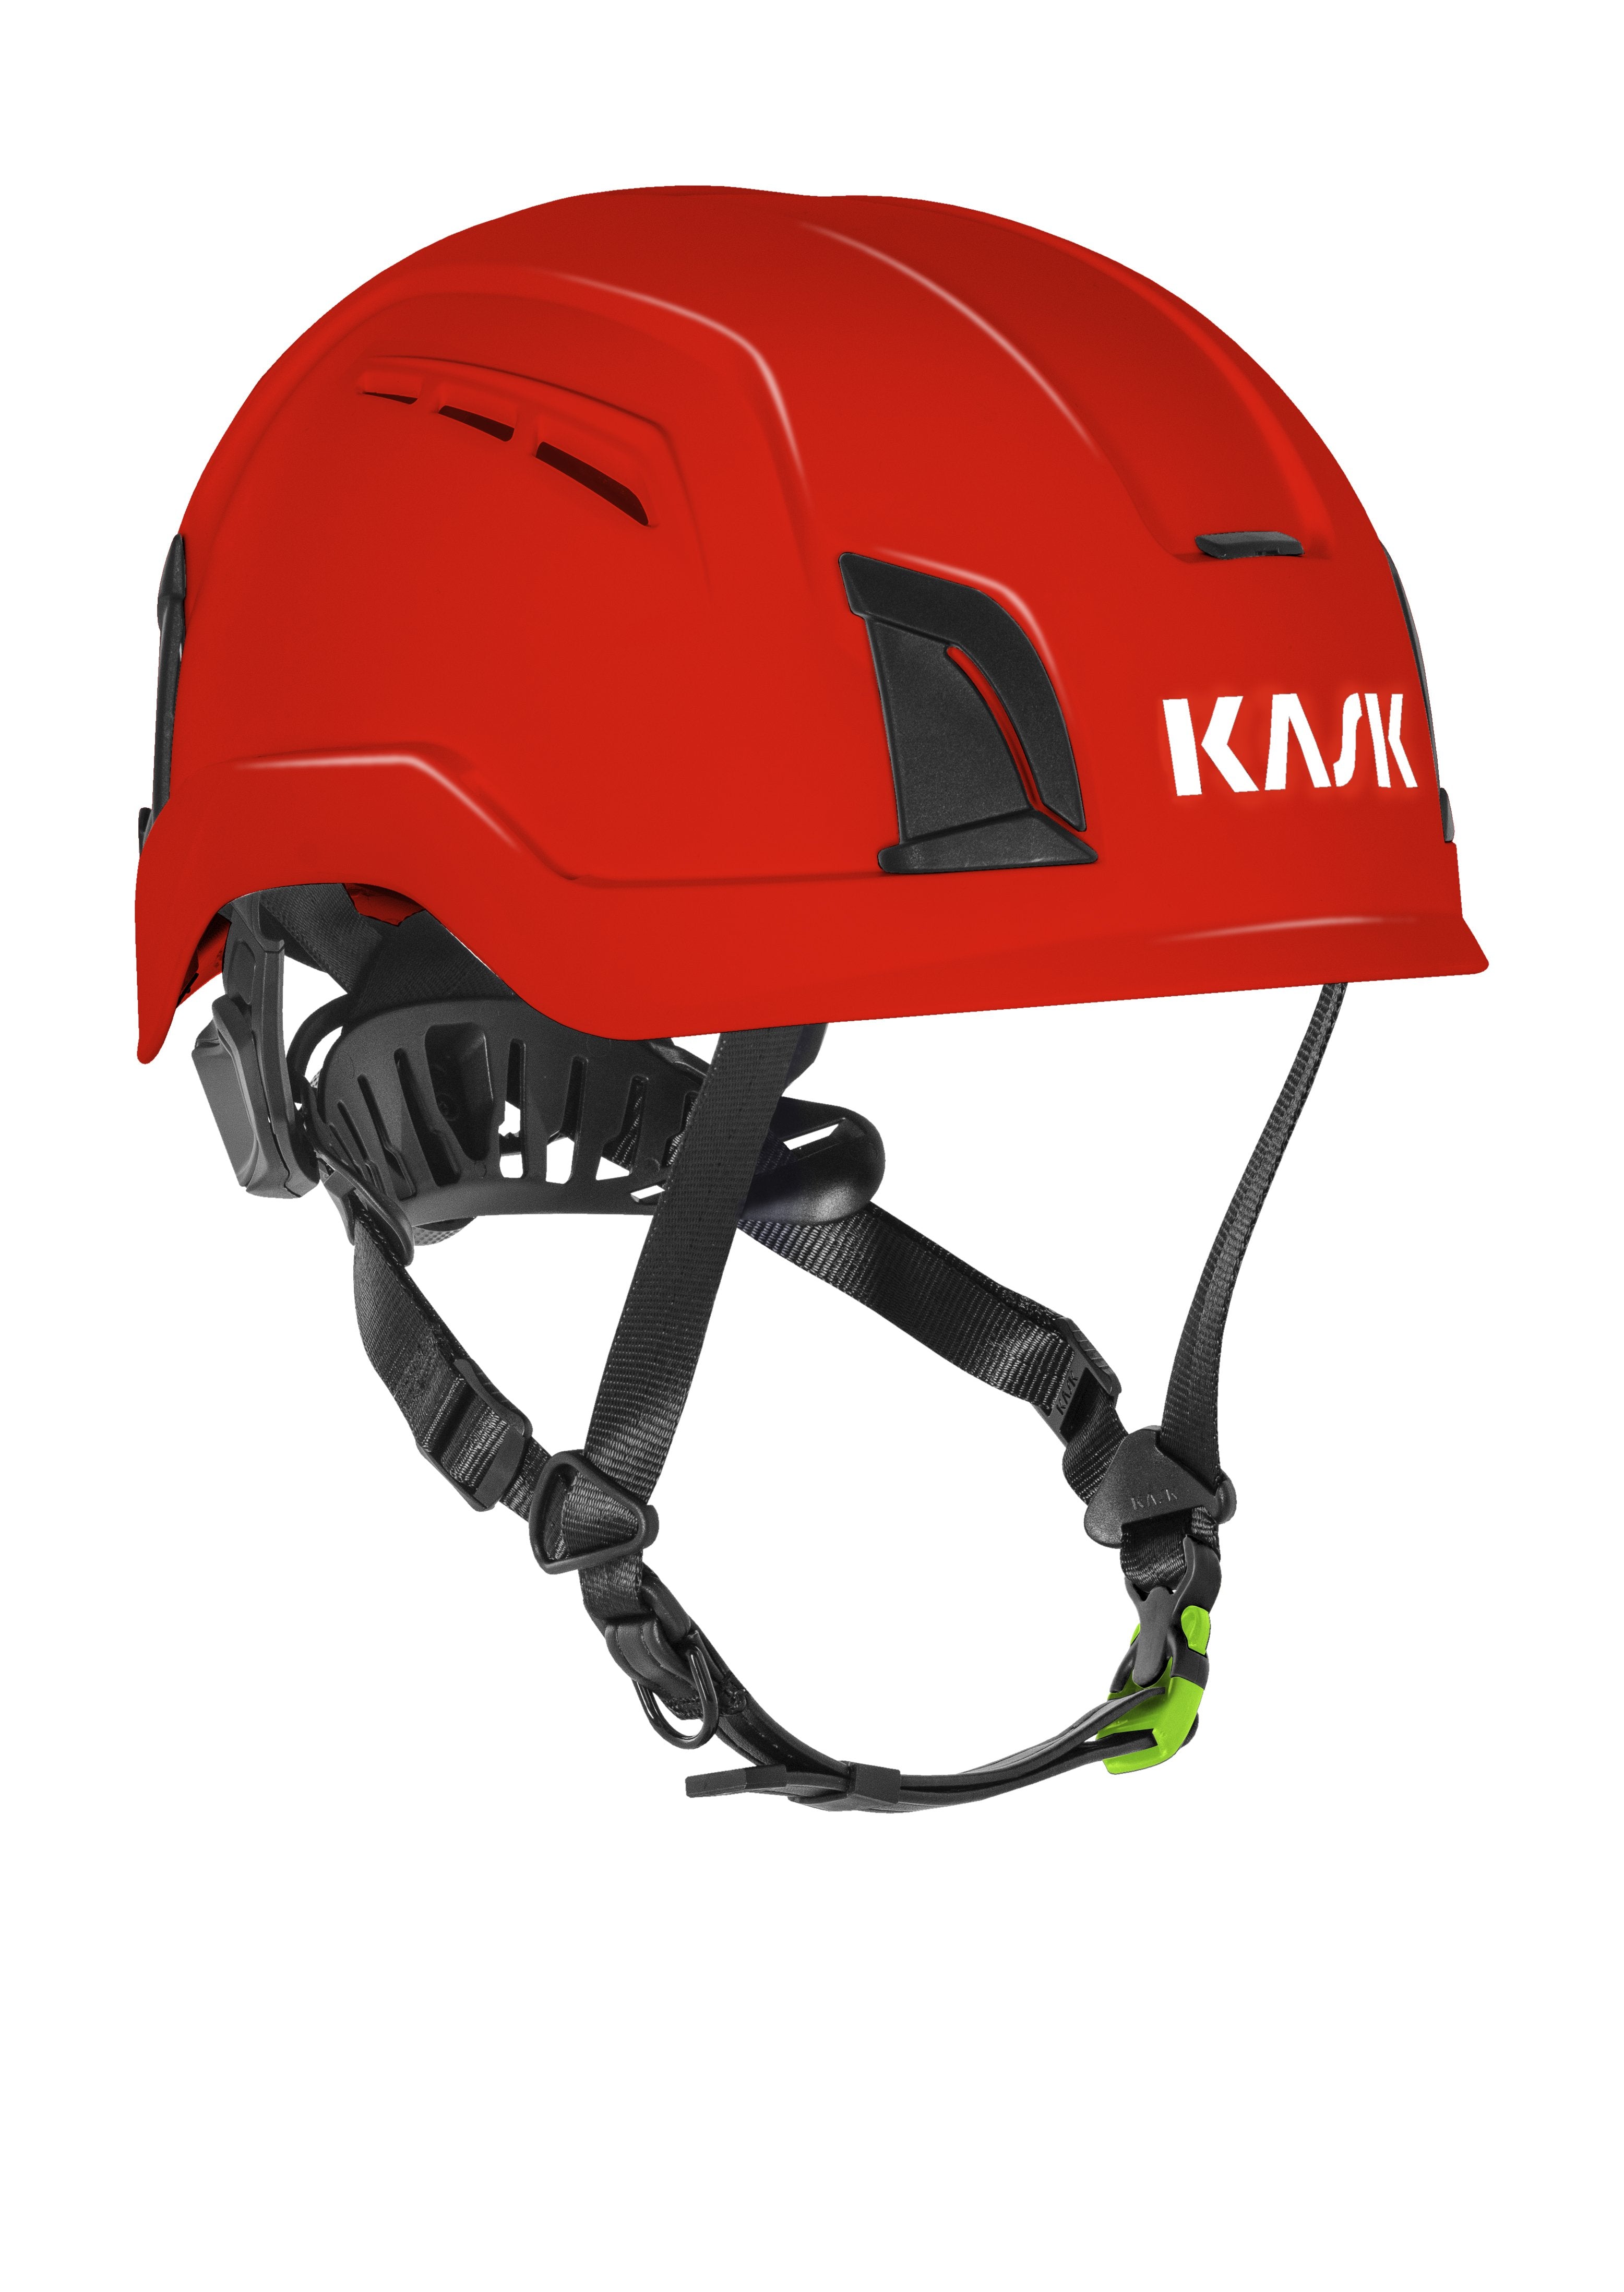 WHE00079 KASK Zenith X PL Helmet